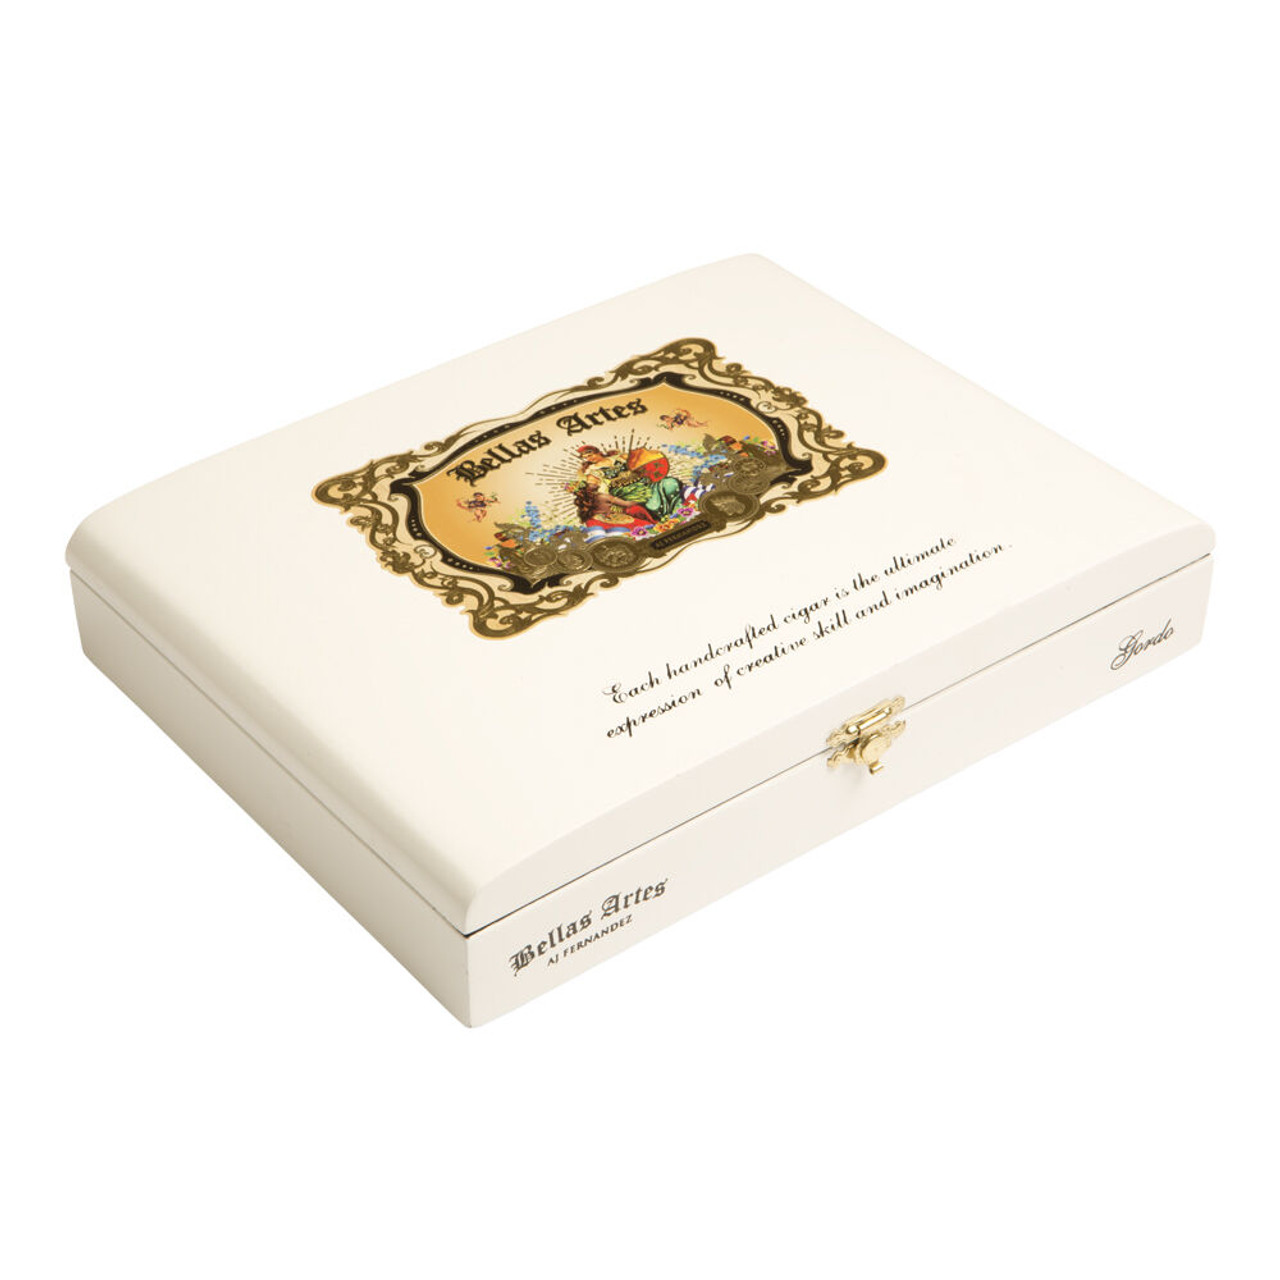 Bellas Artes by AJ Fernandez Maduro Brazil Gordo Cigars - 6.5 x 58 (Box of 20) *Box